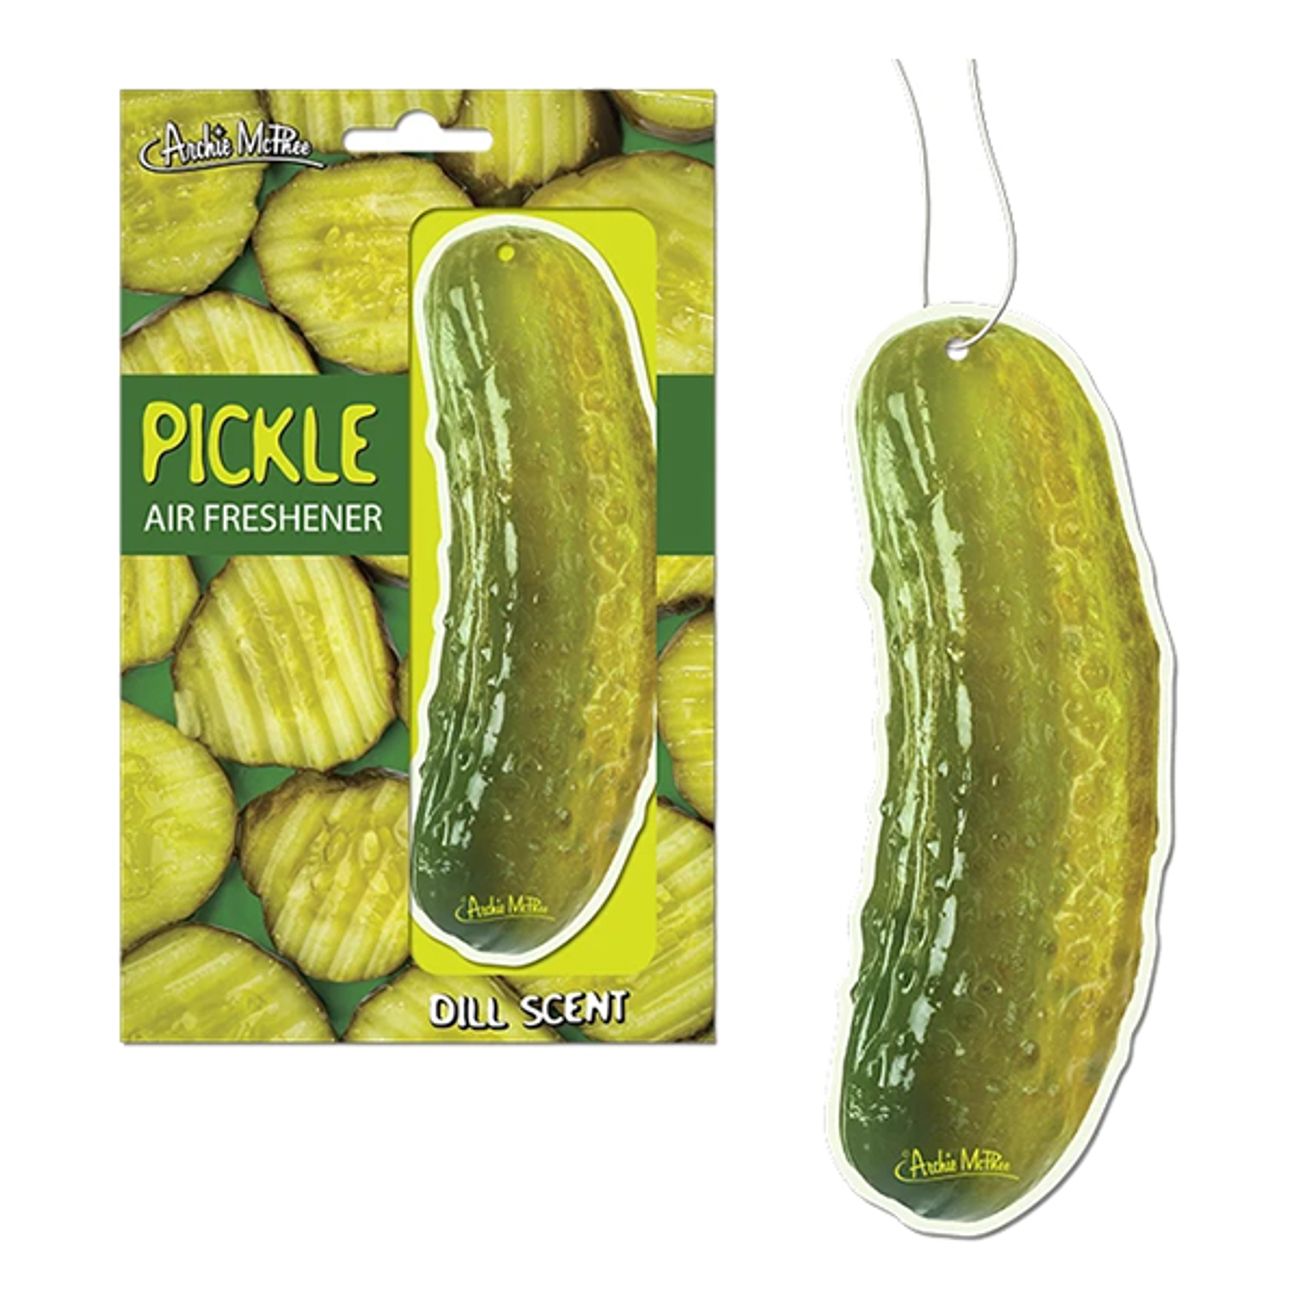 luftfraschare-pickle-74433-1